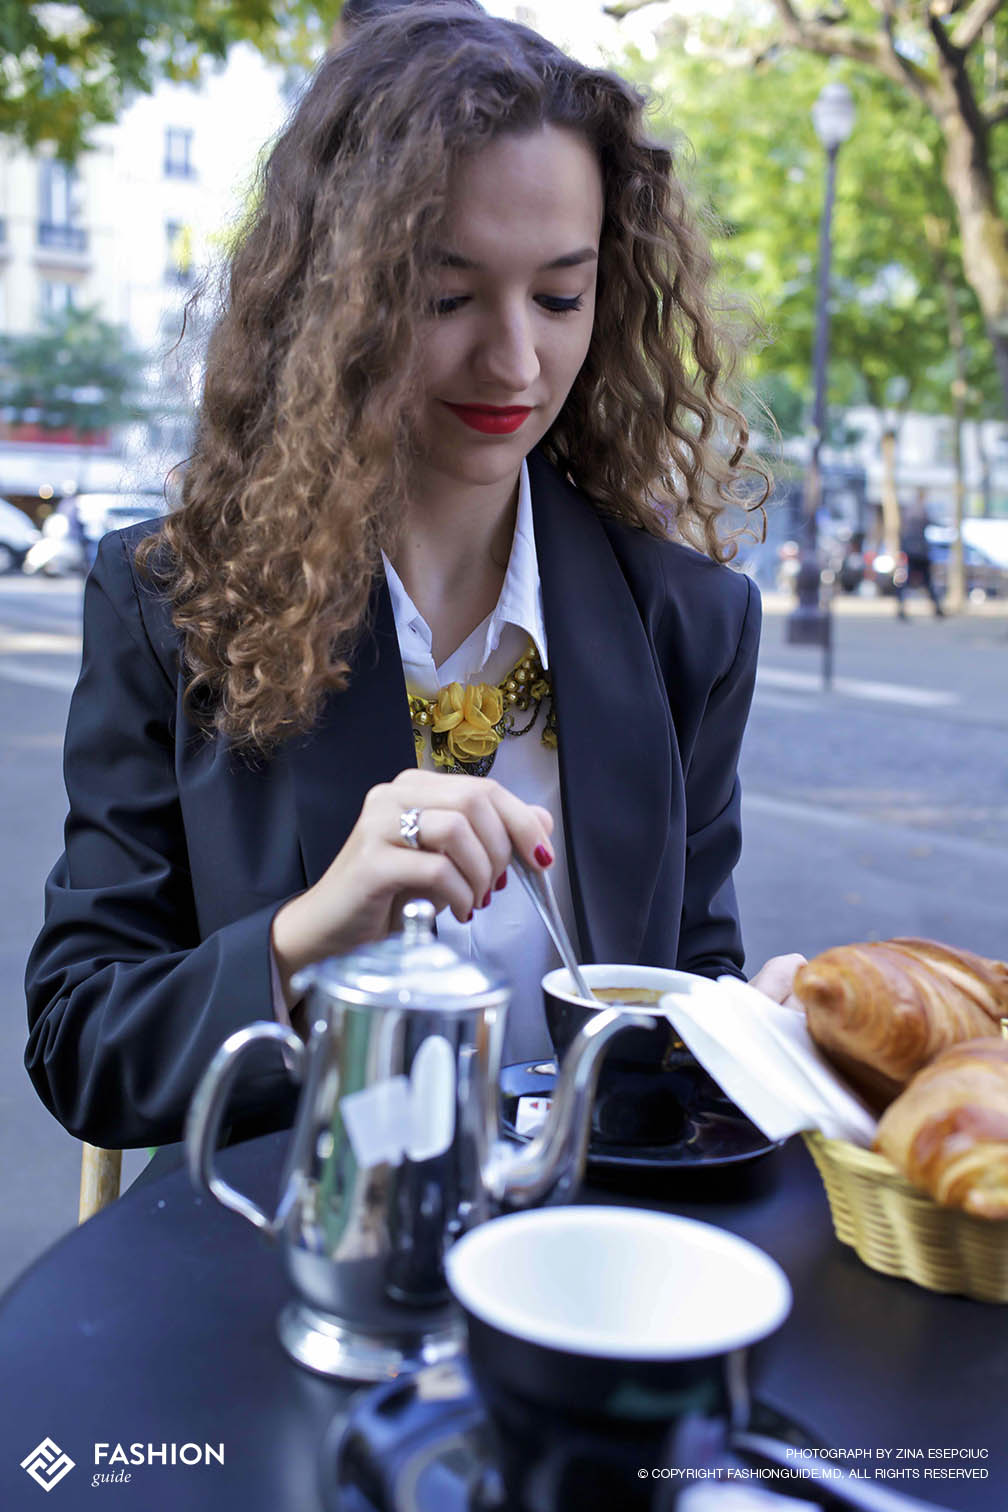 Breakfast in Paris FG